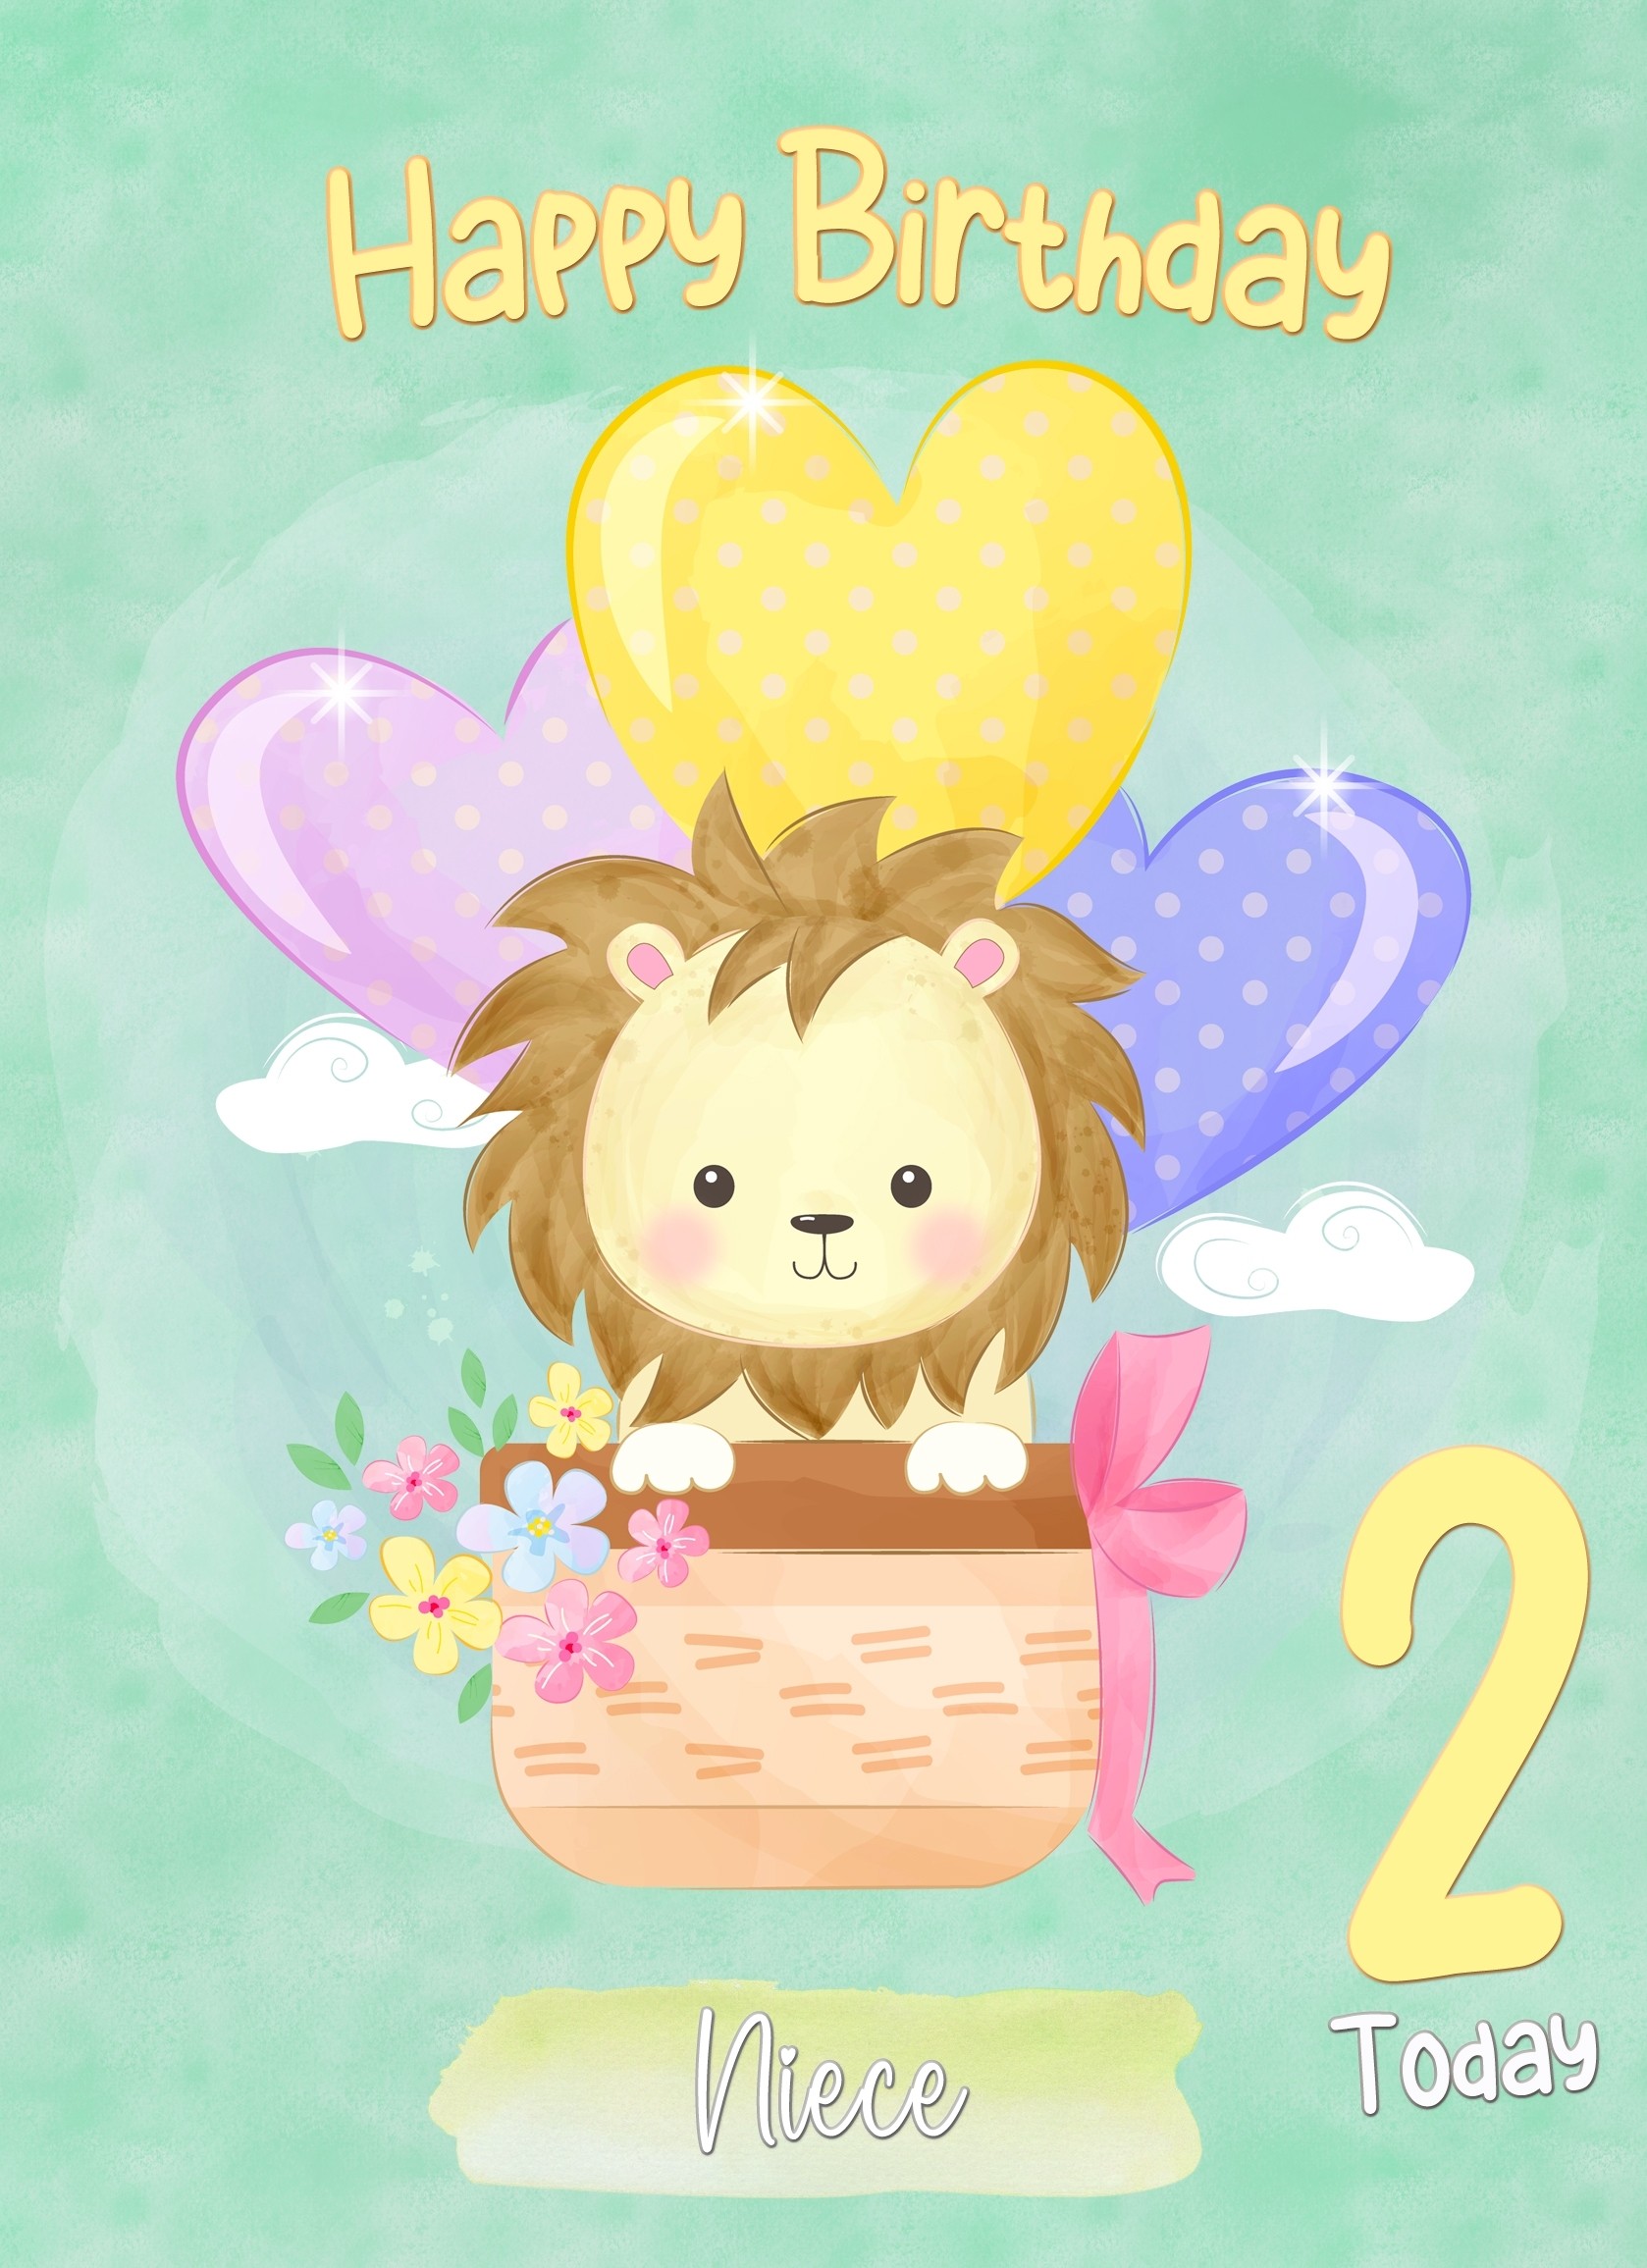 Kids 2nd Birthday Card for Niece (Lion)